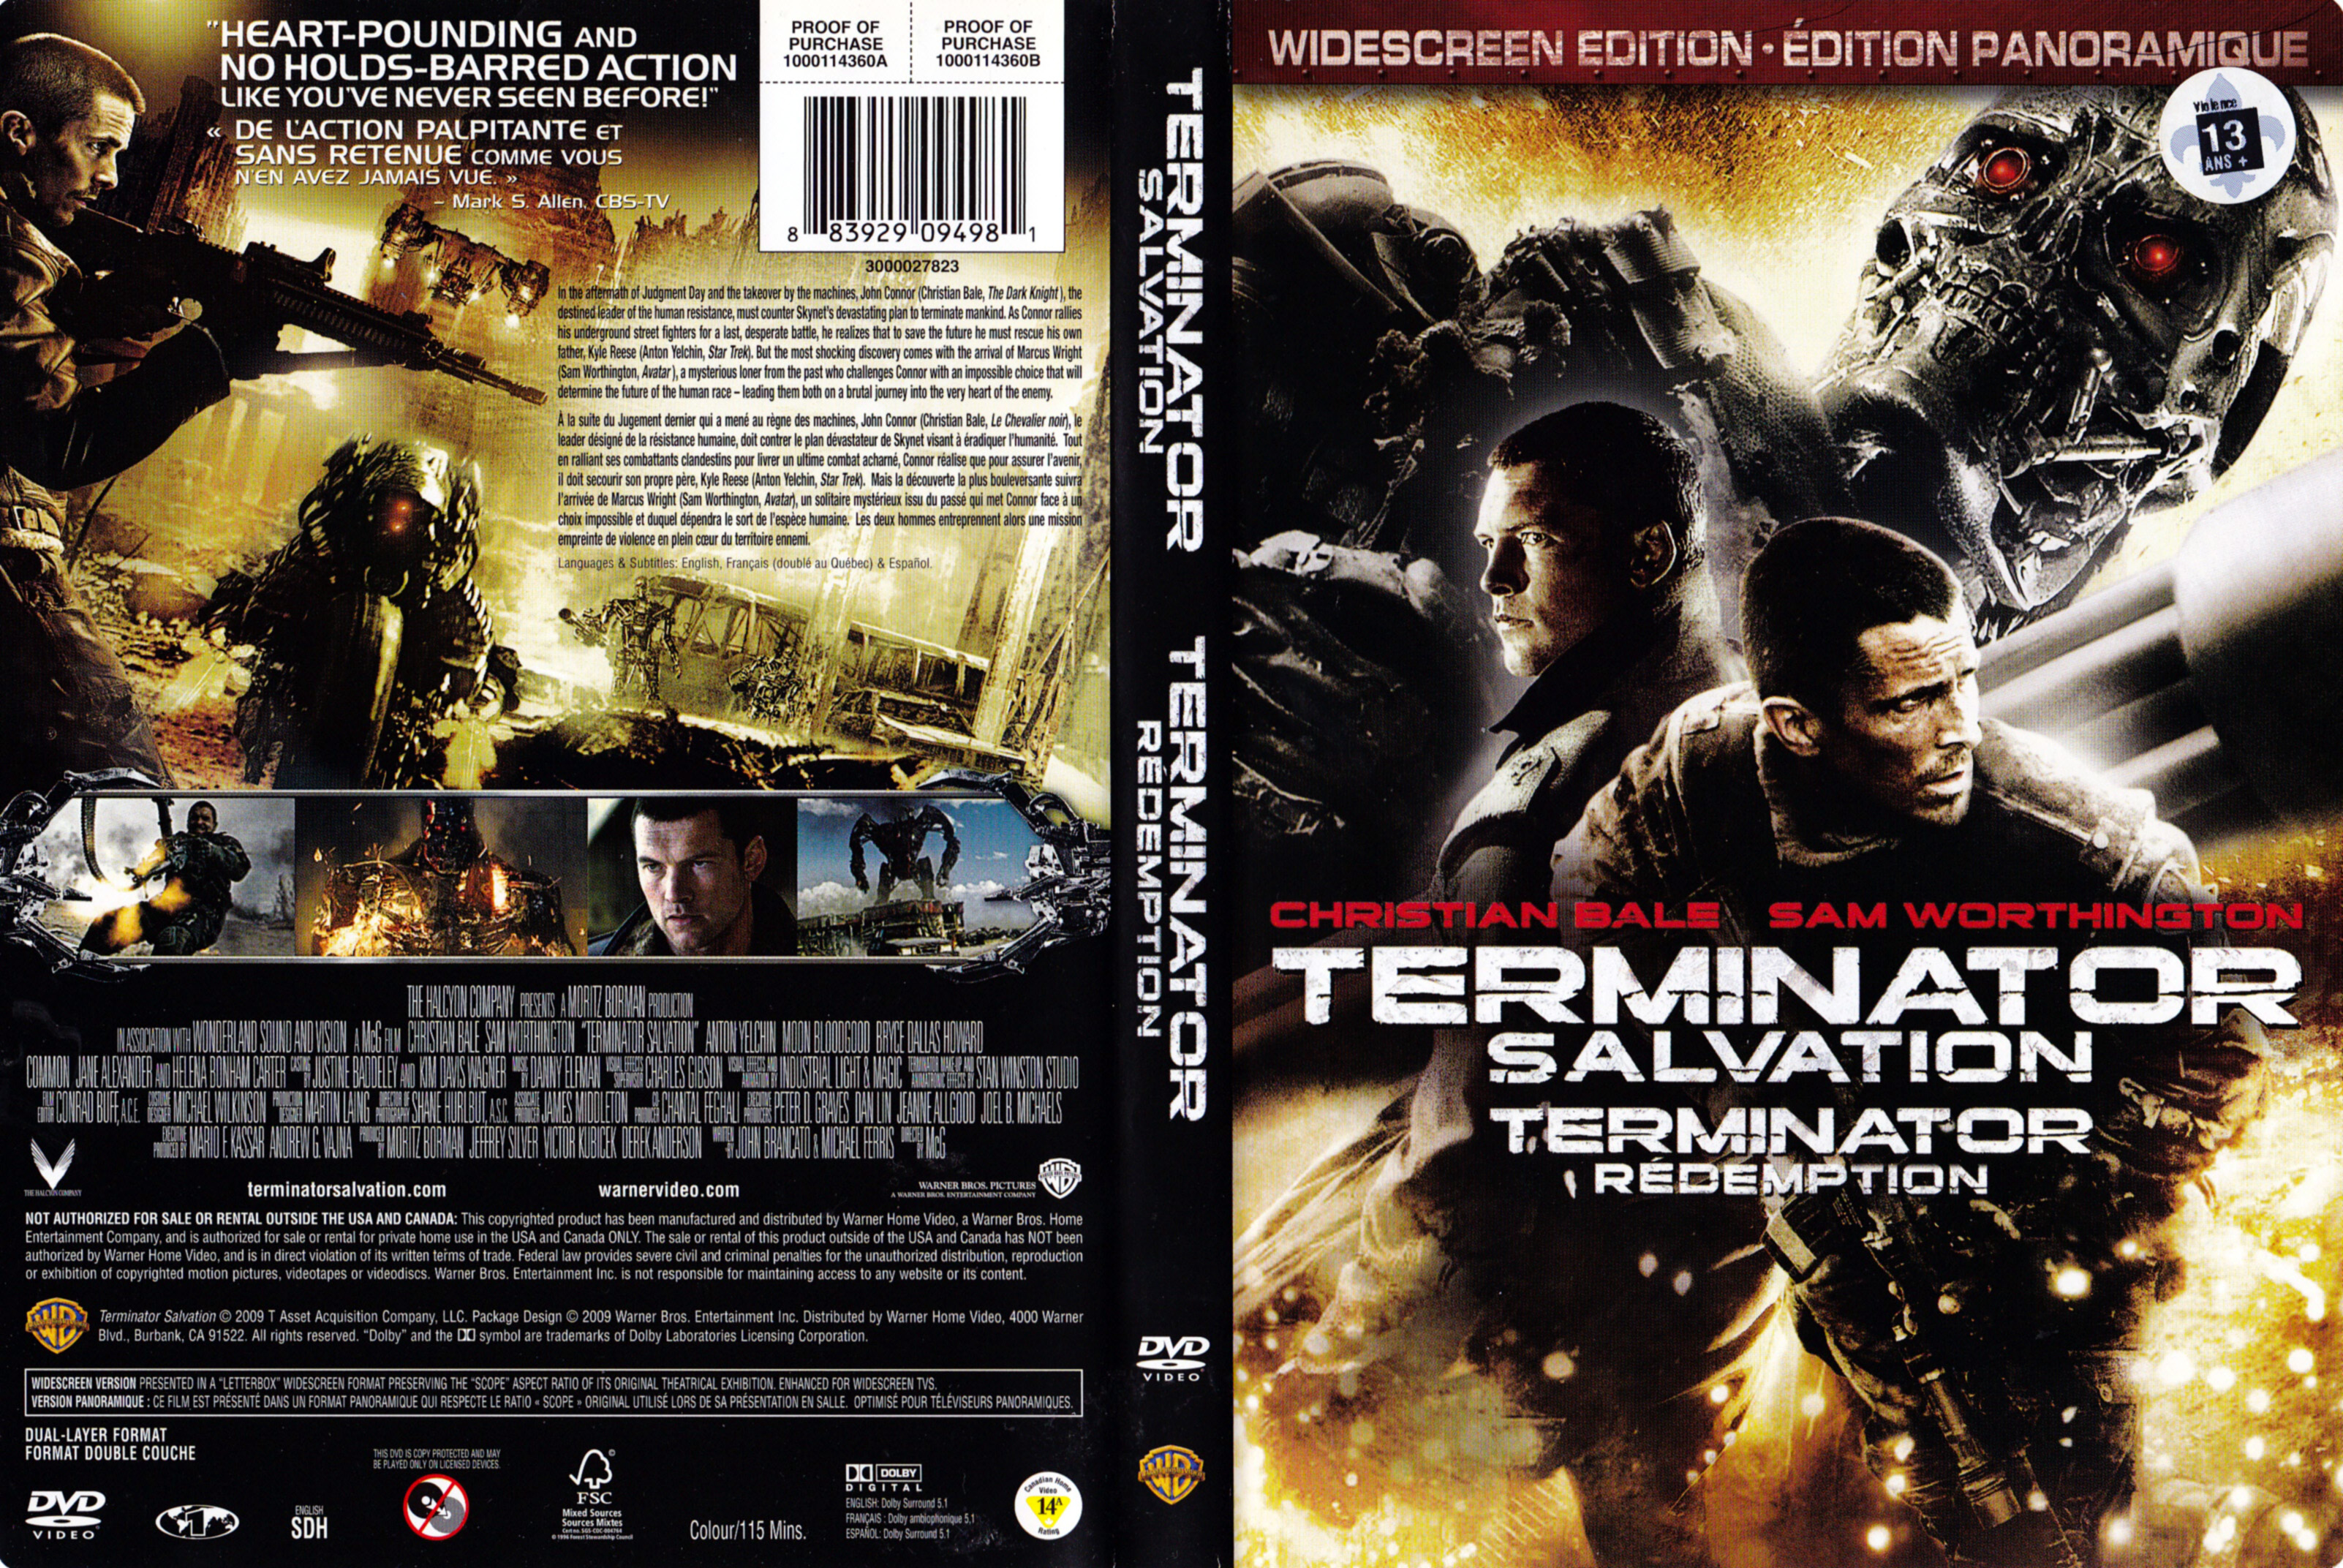 Jaquette DVD Terminateur Rdemption - Terminator salvation (Canadienne)